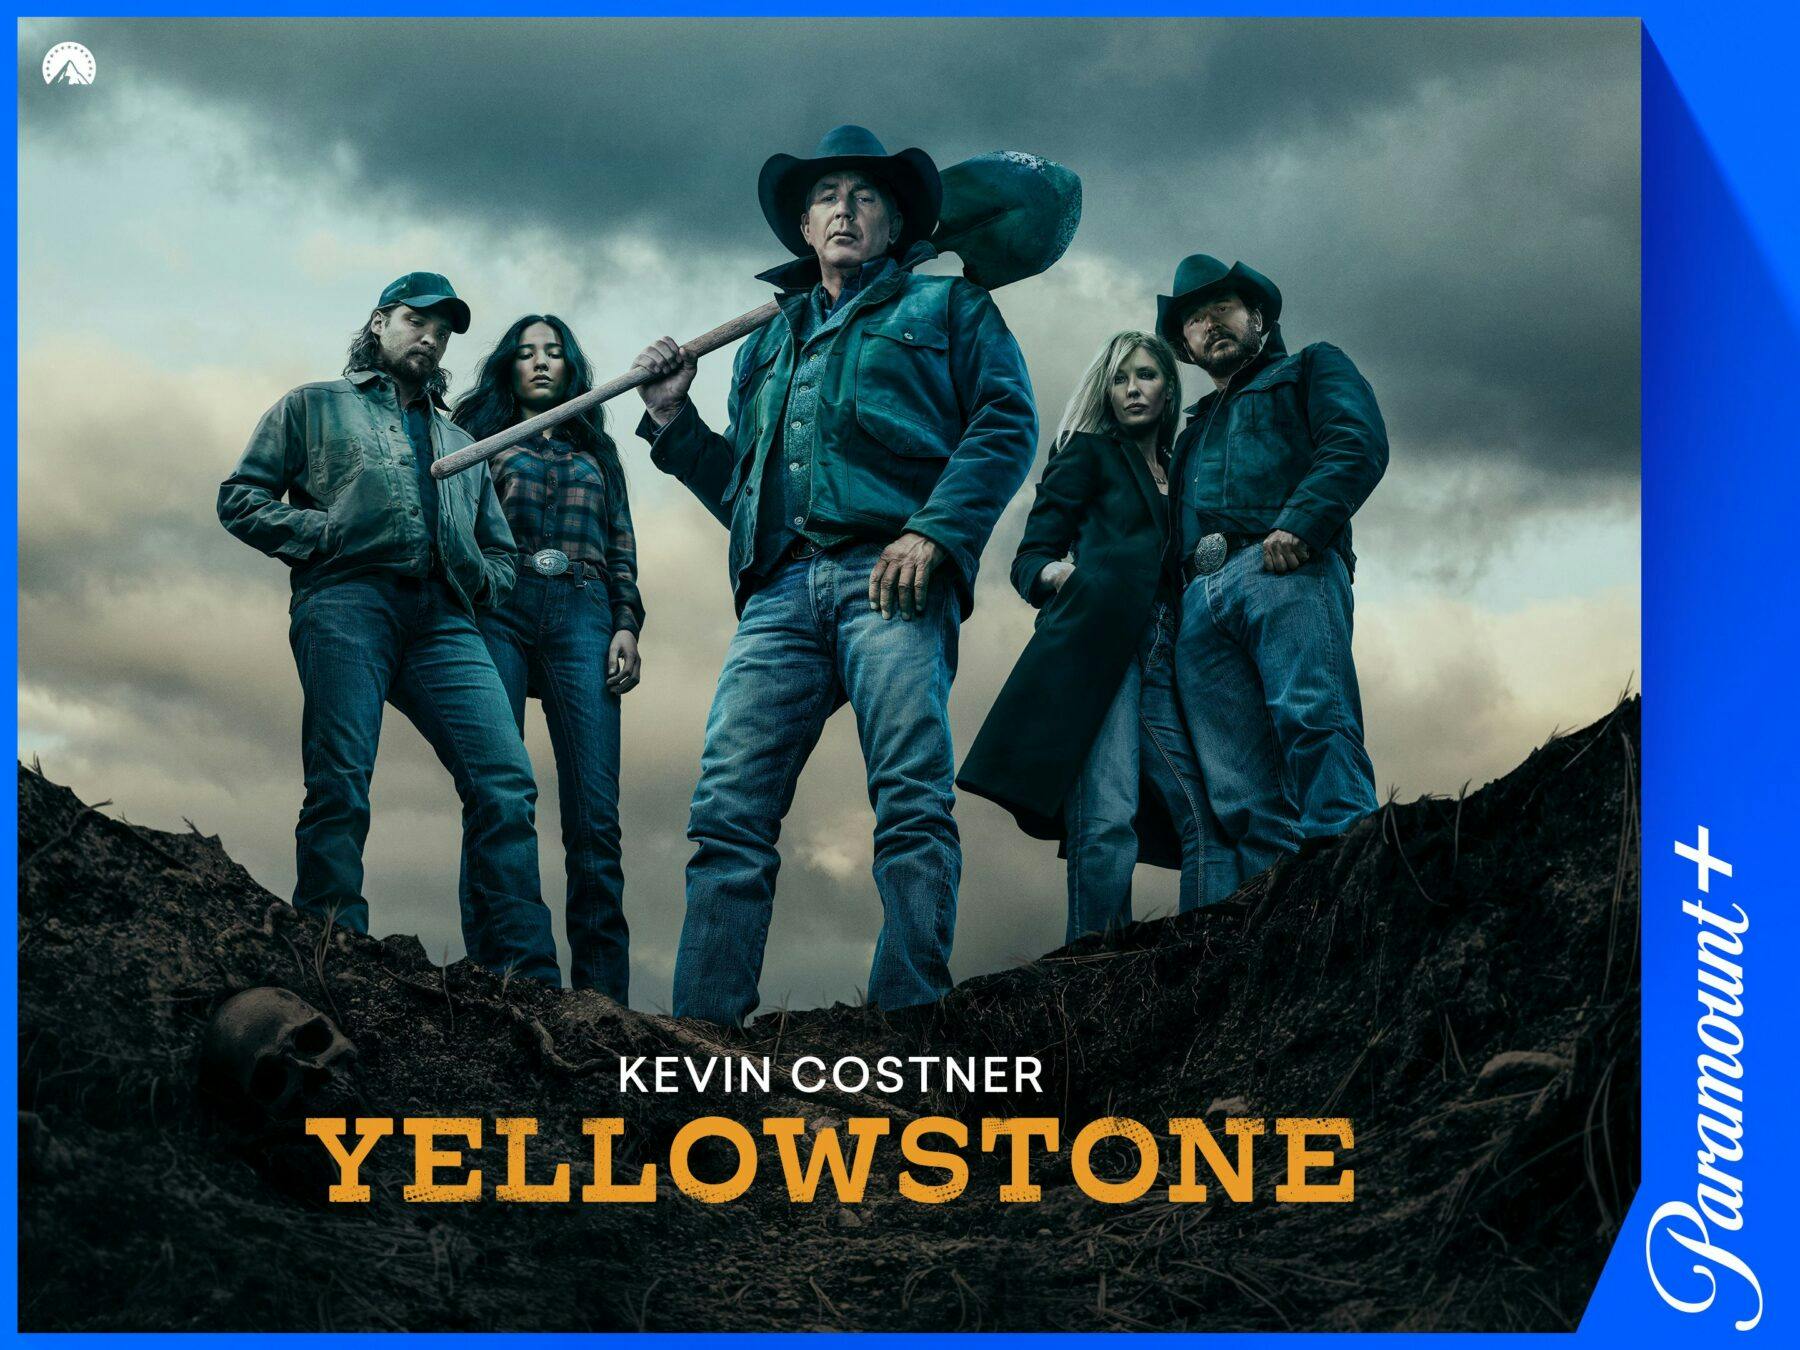 https://imgix.vielskerserier.dk/2021/03/Yellowstone7.jpg